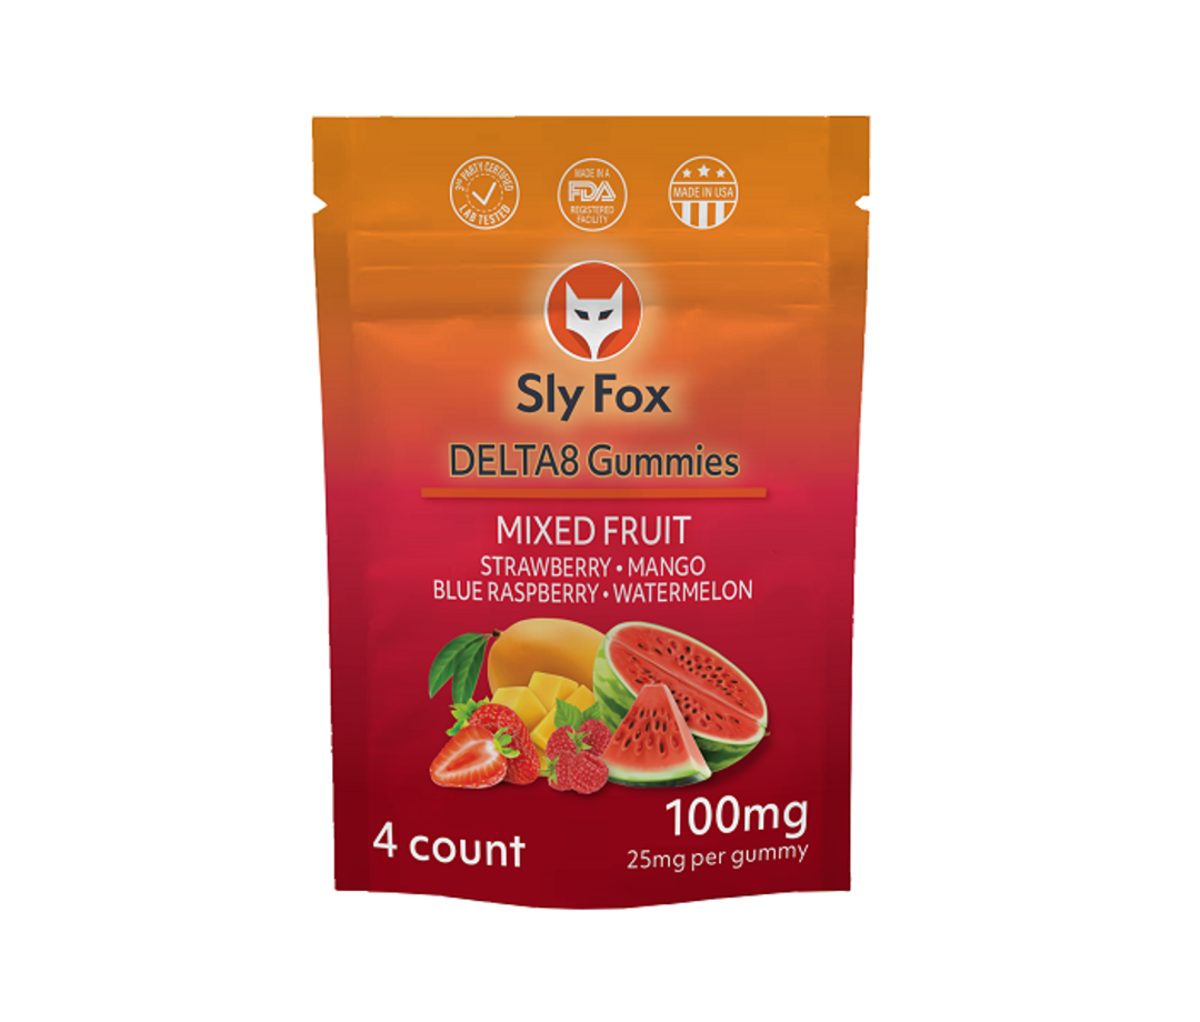 Sly Fox Delta8 Gummies Mixed Fruit